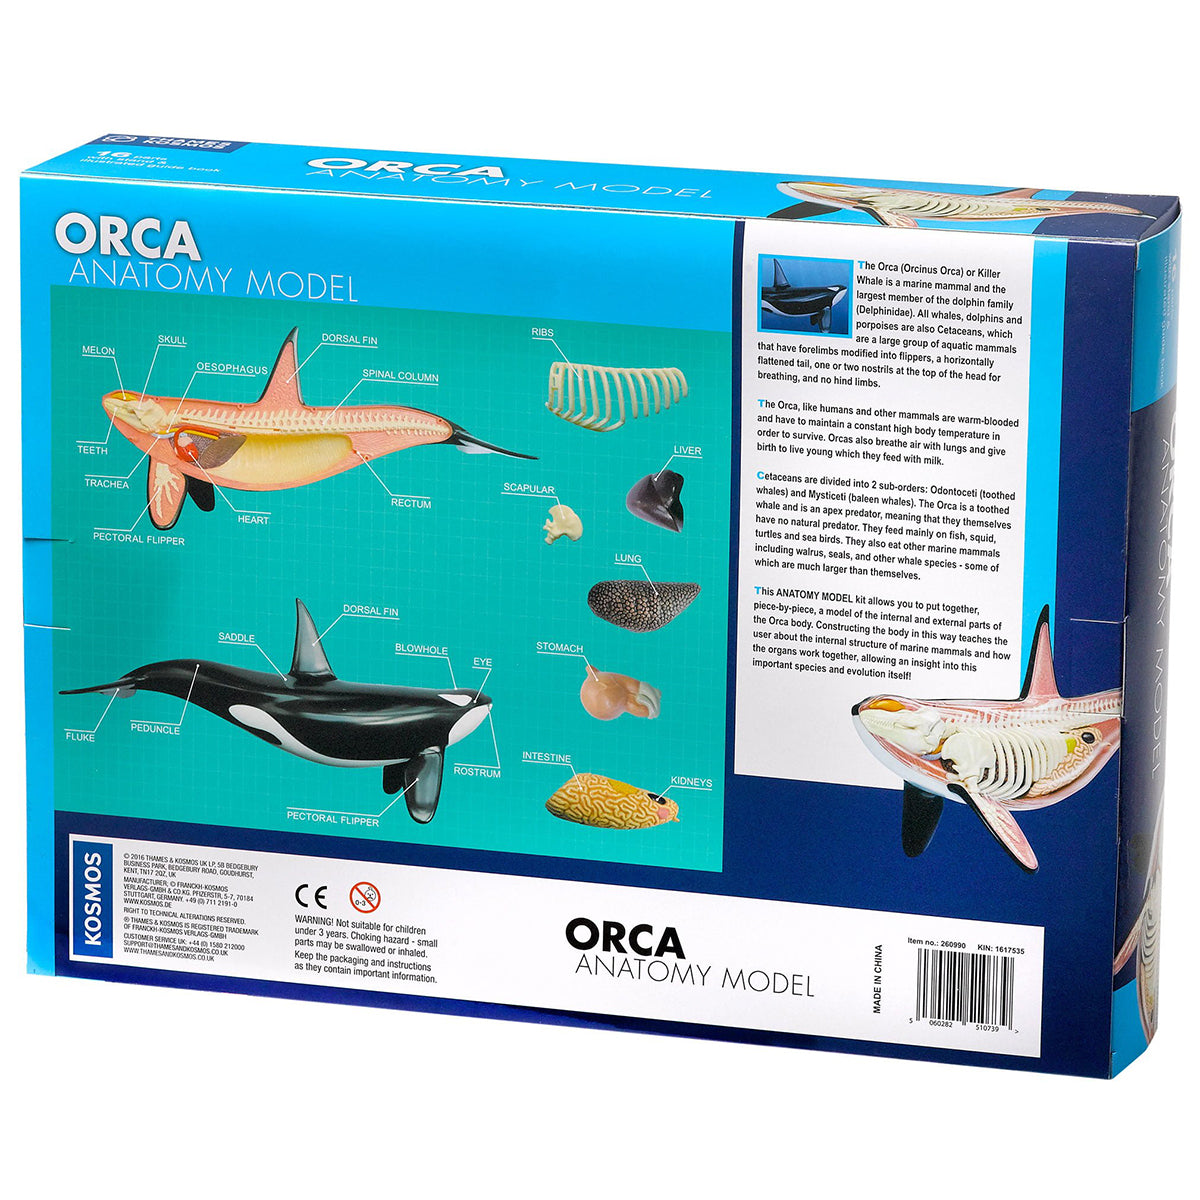 ORCA Anatomy Model